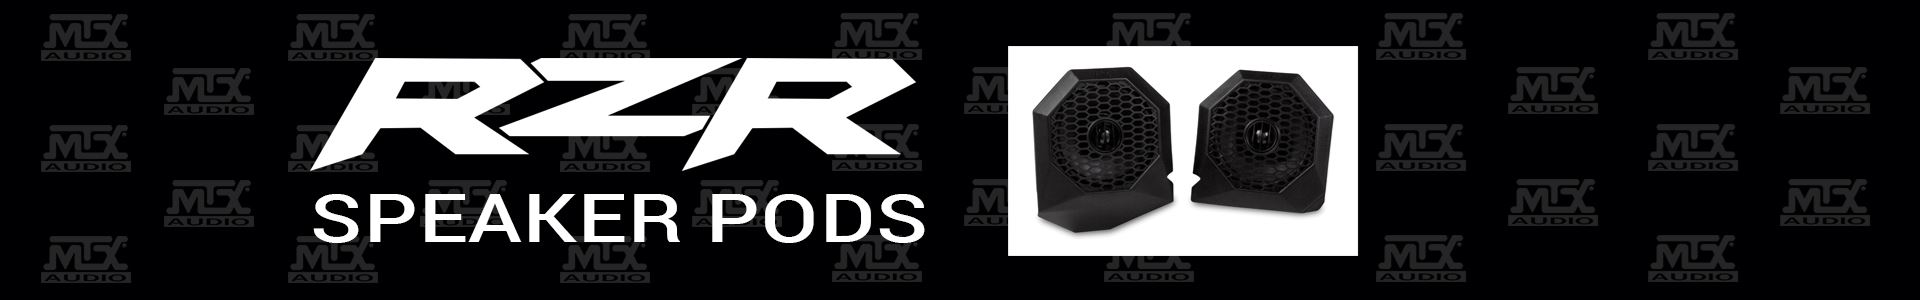 MTX Releases Polaris RZR Specific Speaker Pods